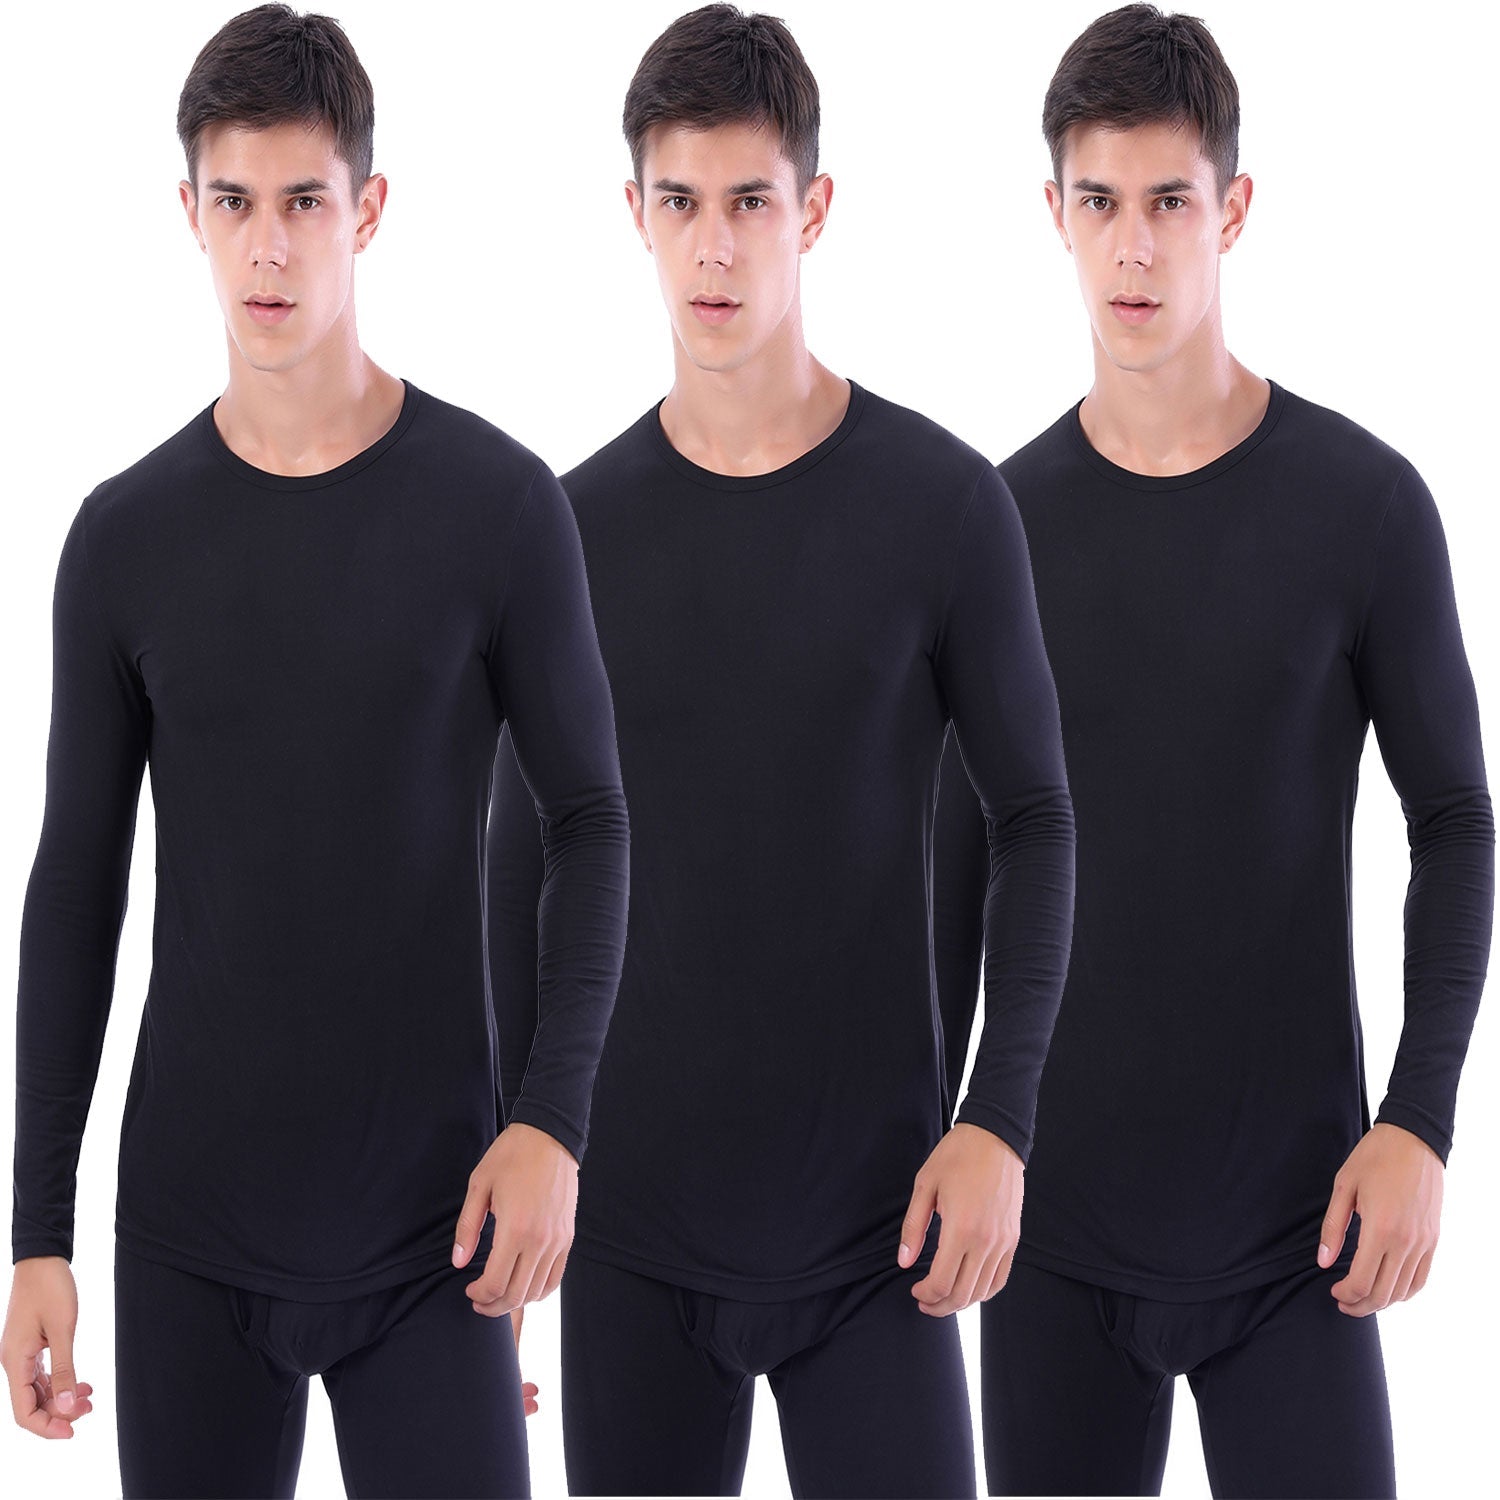 Winter Thermal Tops for Boys Fleece Lined Underwear Tee Unisex Long Sleeve  Undershirts Baselayer